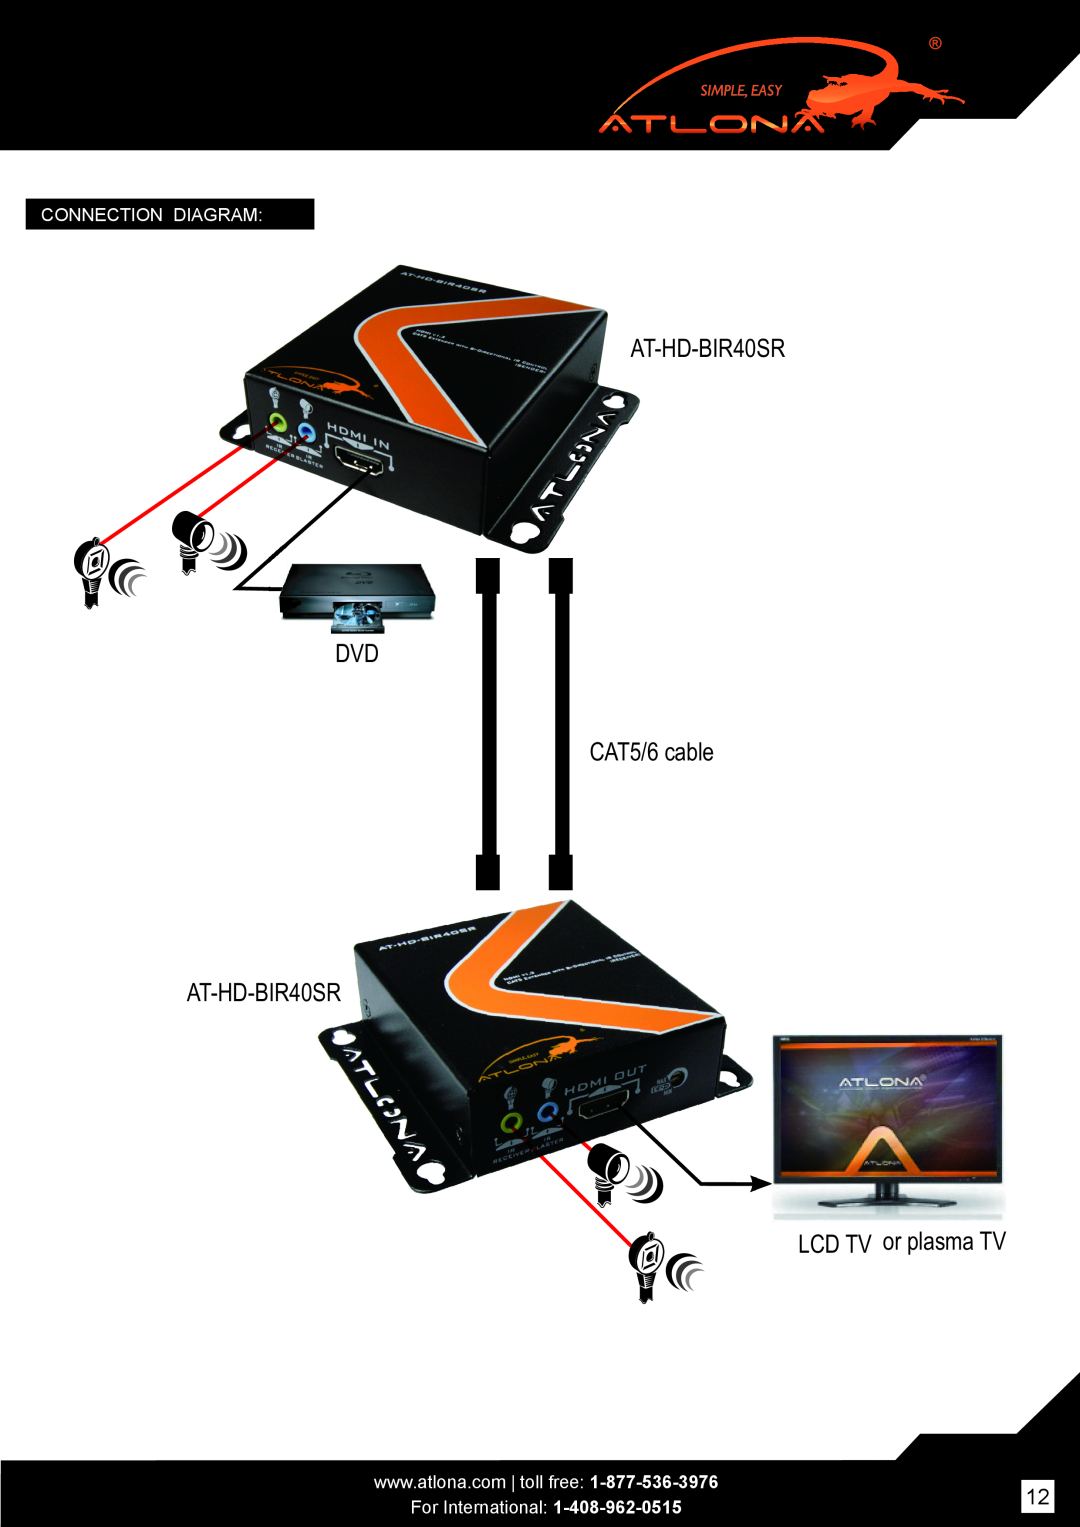 Atlona AT -HD-BIR40SR DVD CAT5/6 cable AT-HD-BIR40SR LCD TV or plasma TV, Connection Diagram, For International 